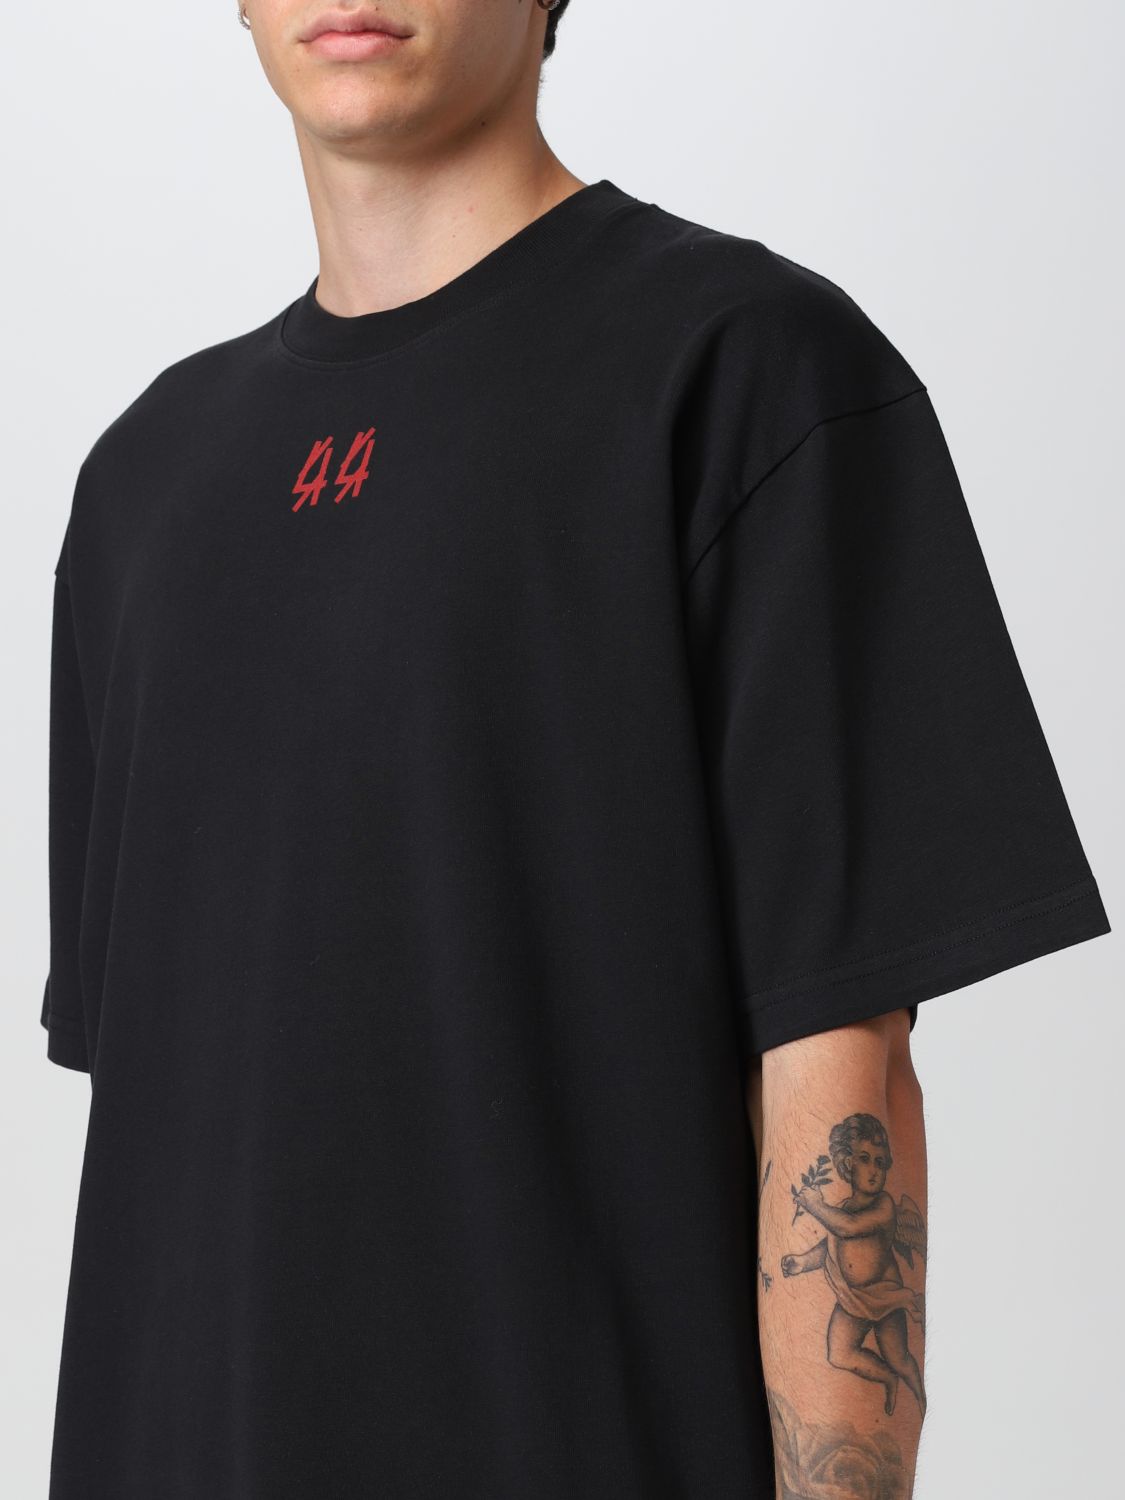 44 Label GroupHeren Shirts Heren Shirts Zwart T-Shirts 24/7